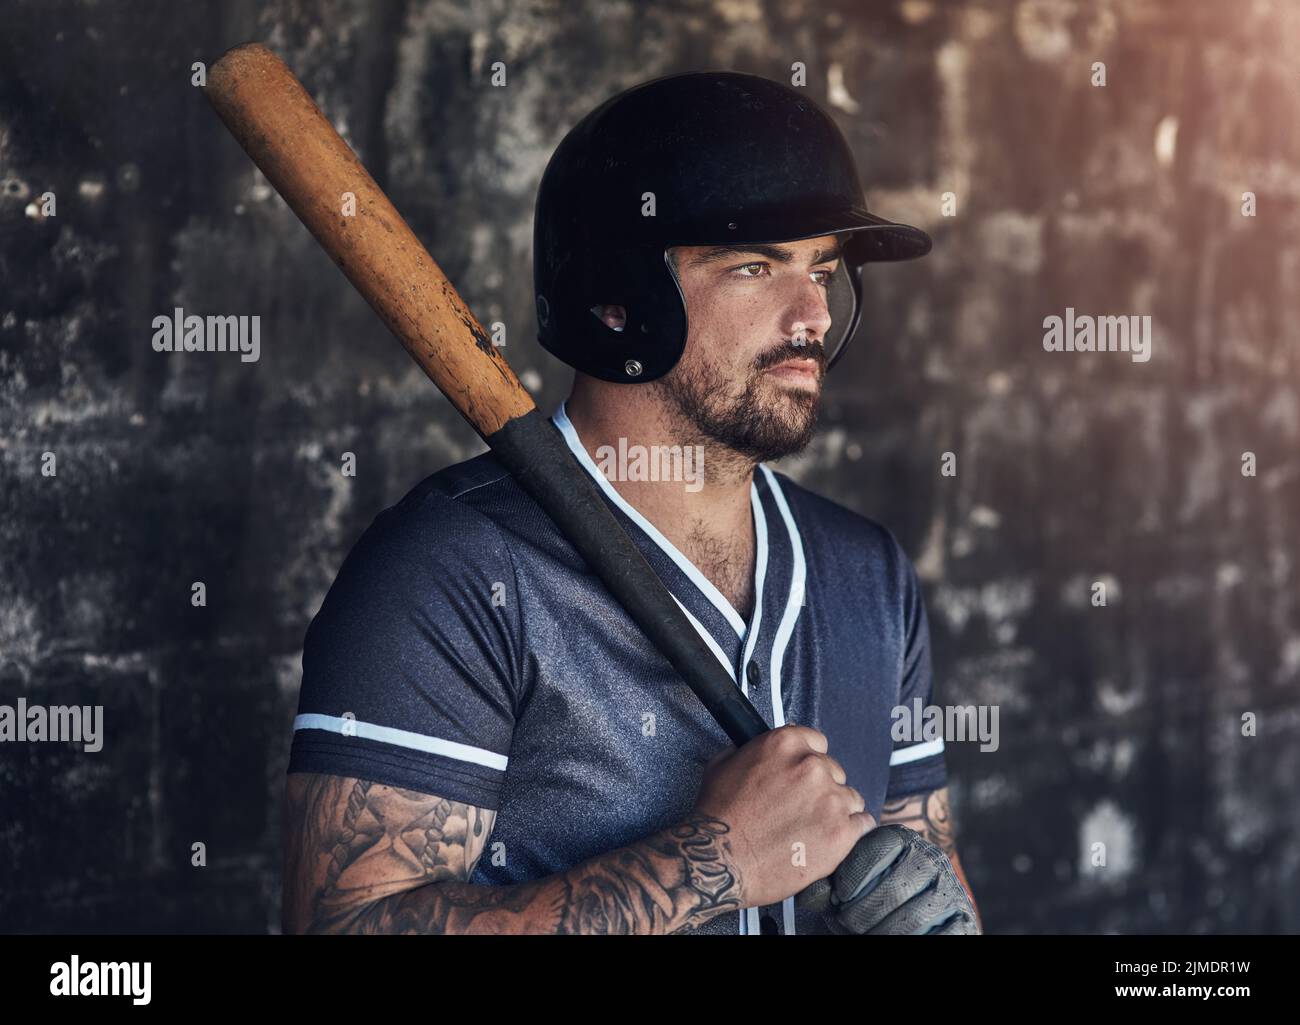 Baseball player hitting ball hi-res stock photography and images - Alamy